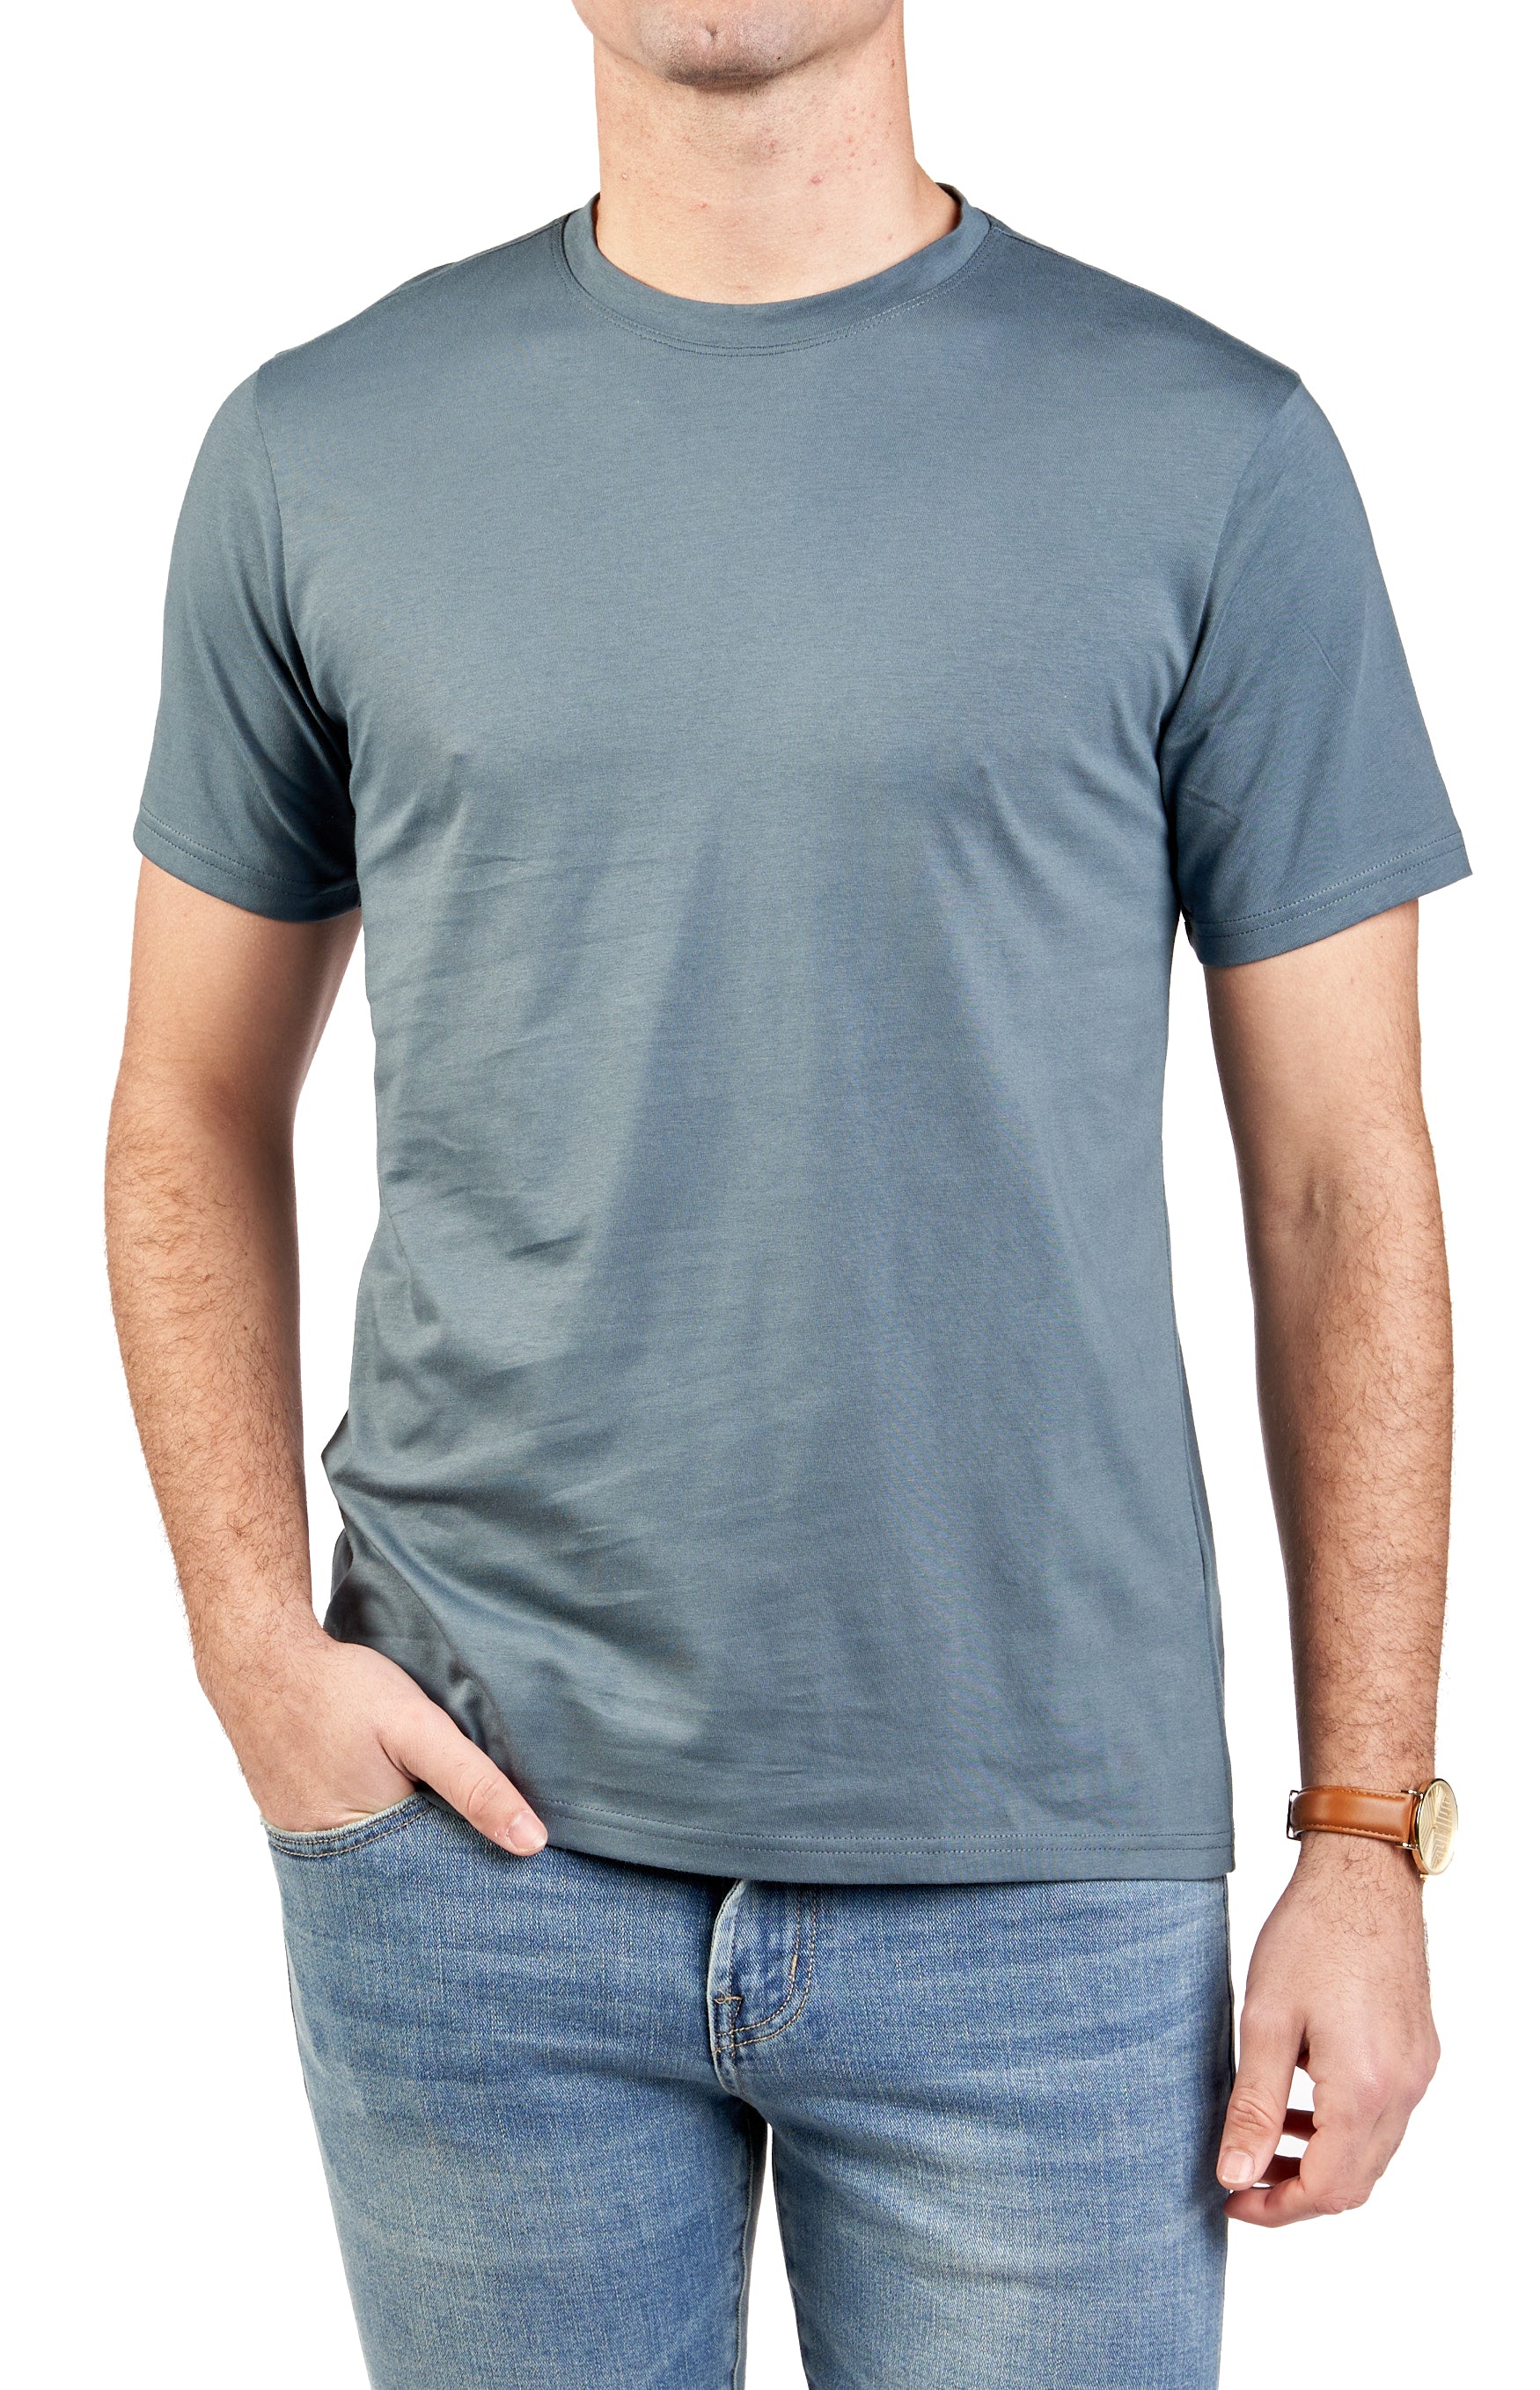 Vustra Steel Blue Short-Sleeve T-Shirt